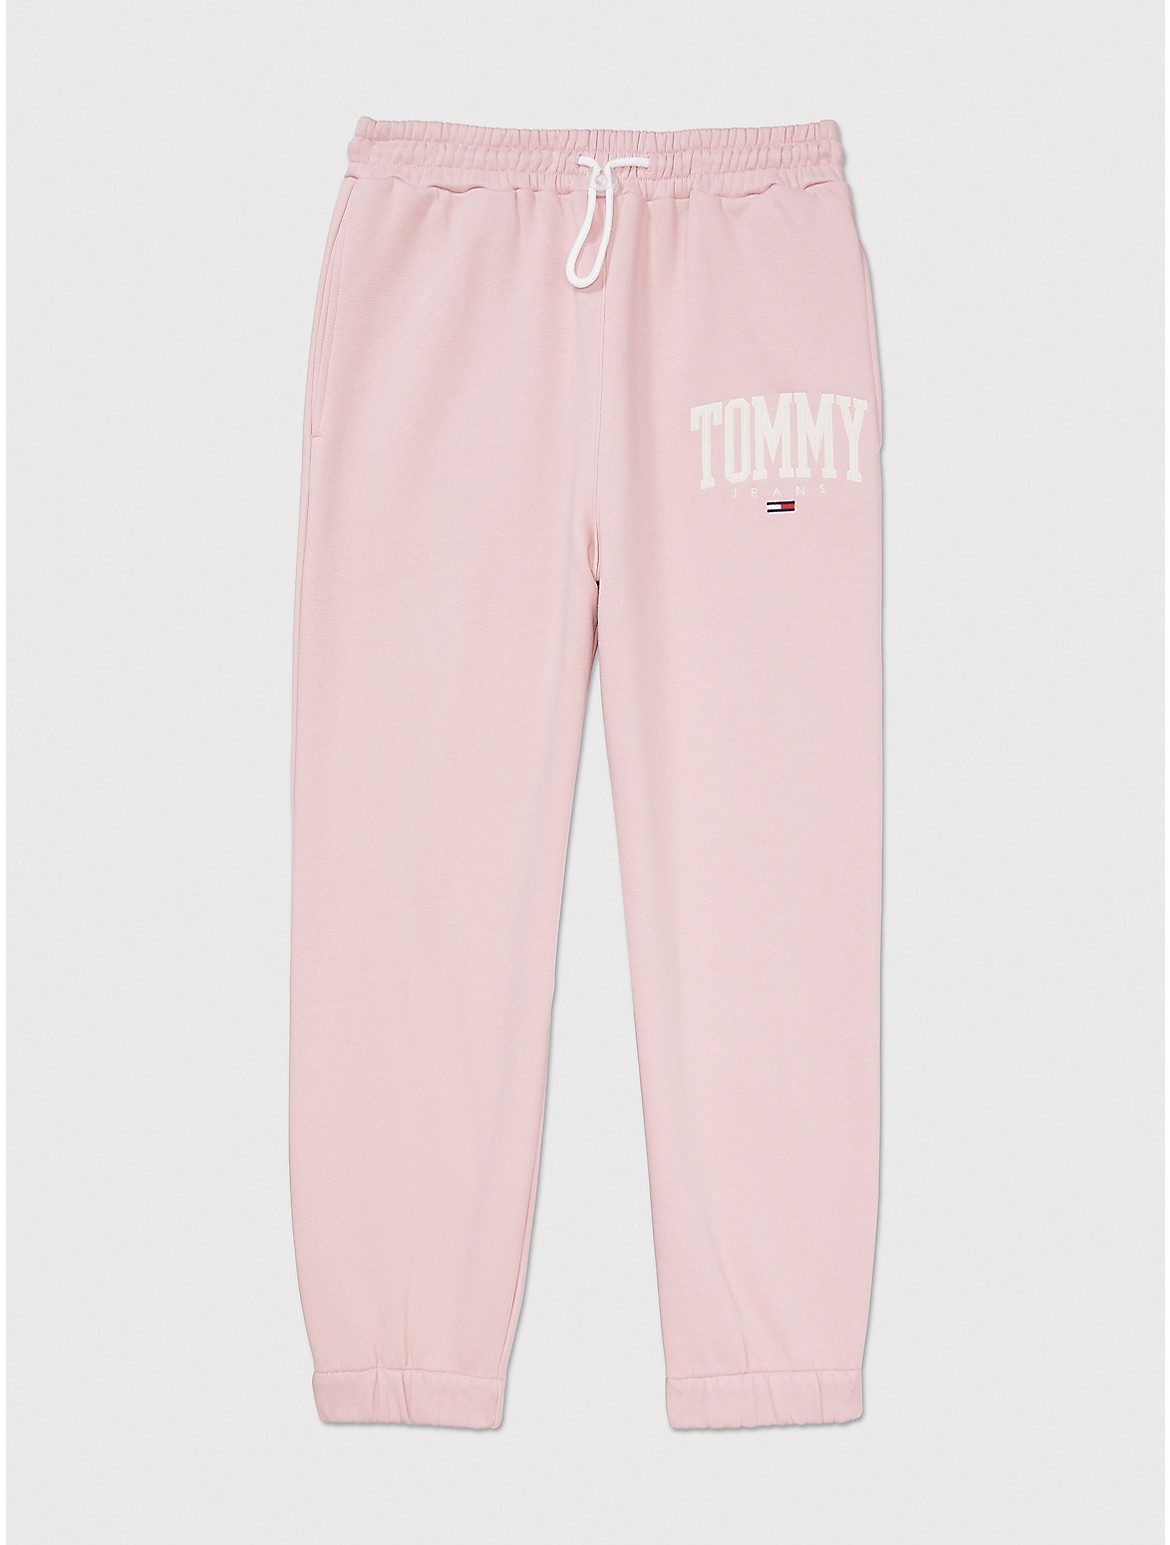 Tommy Hilfiger Collegiate Sweatpant In Broadway Pink